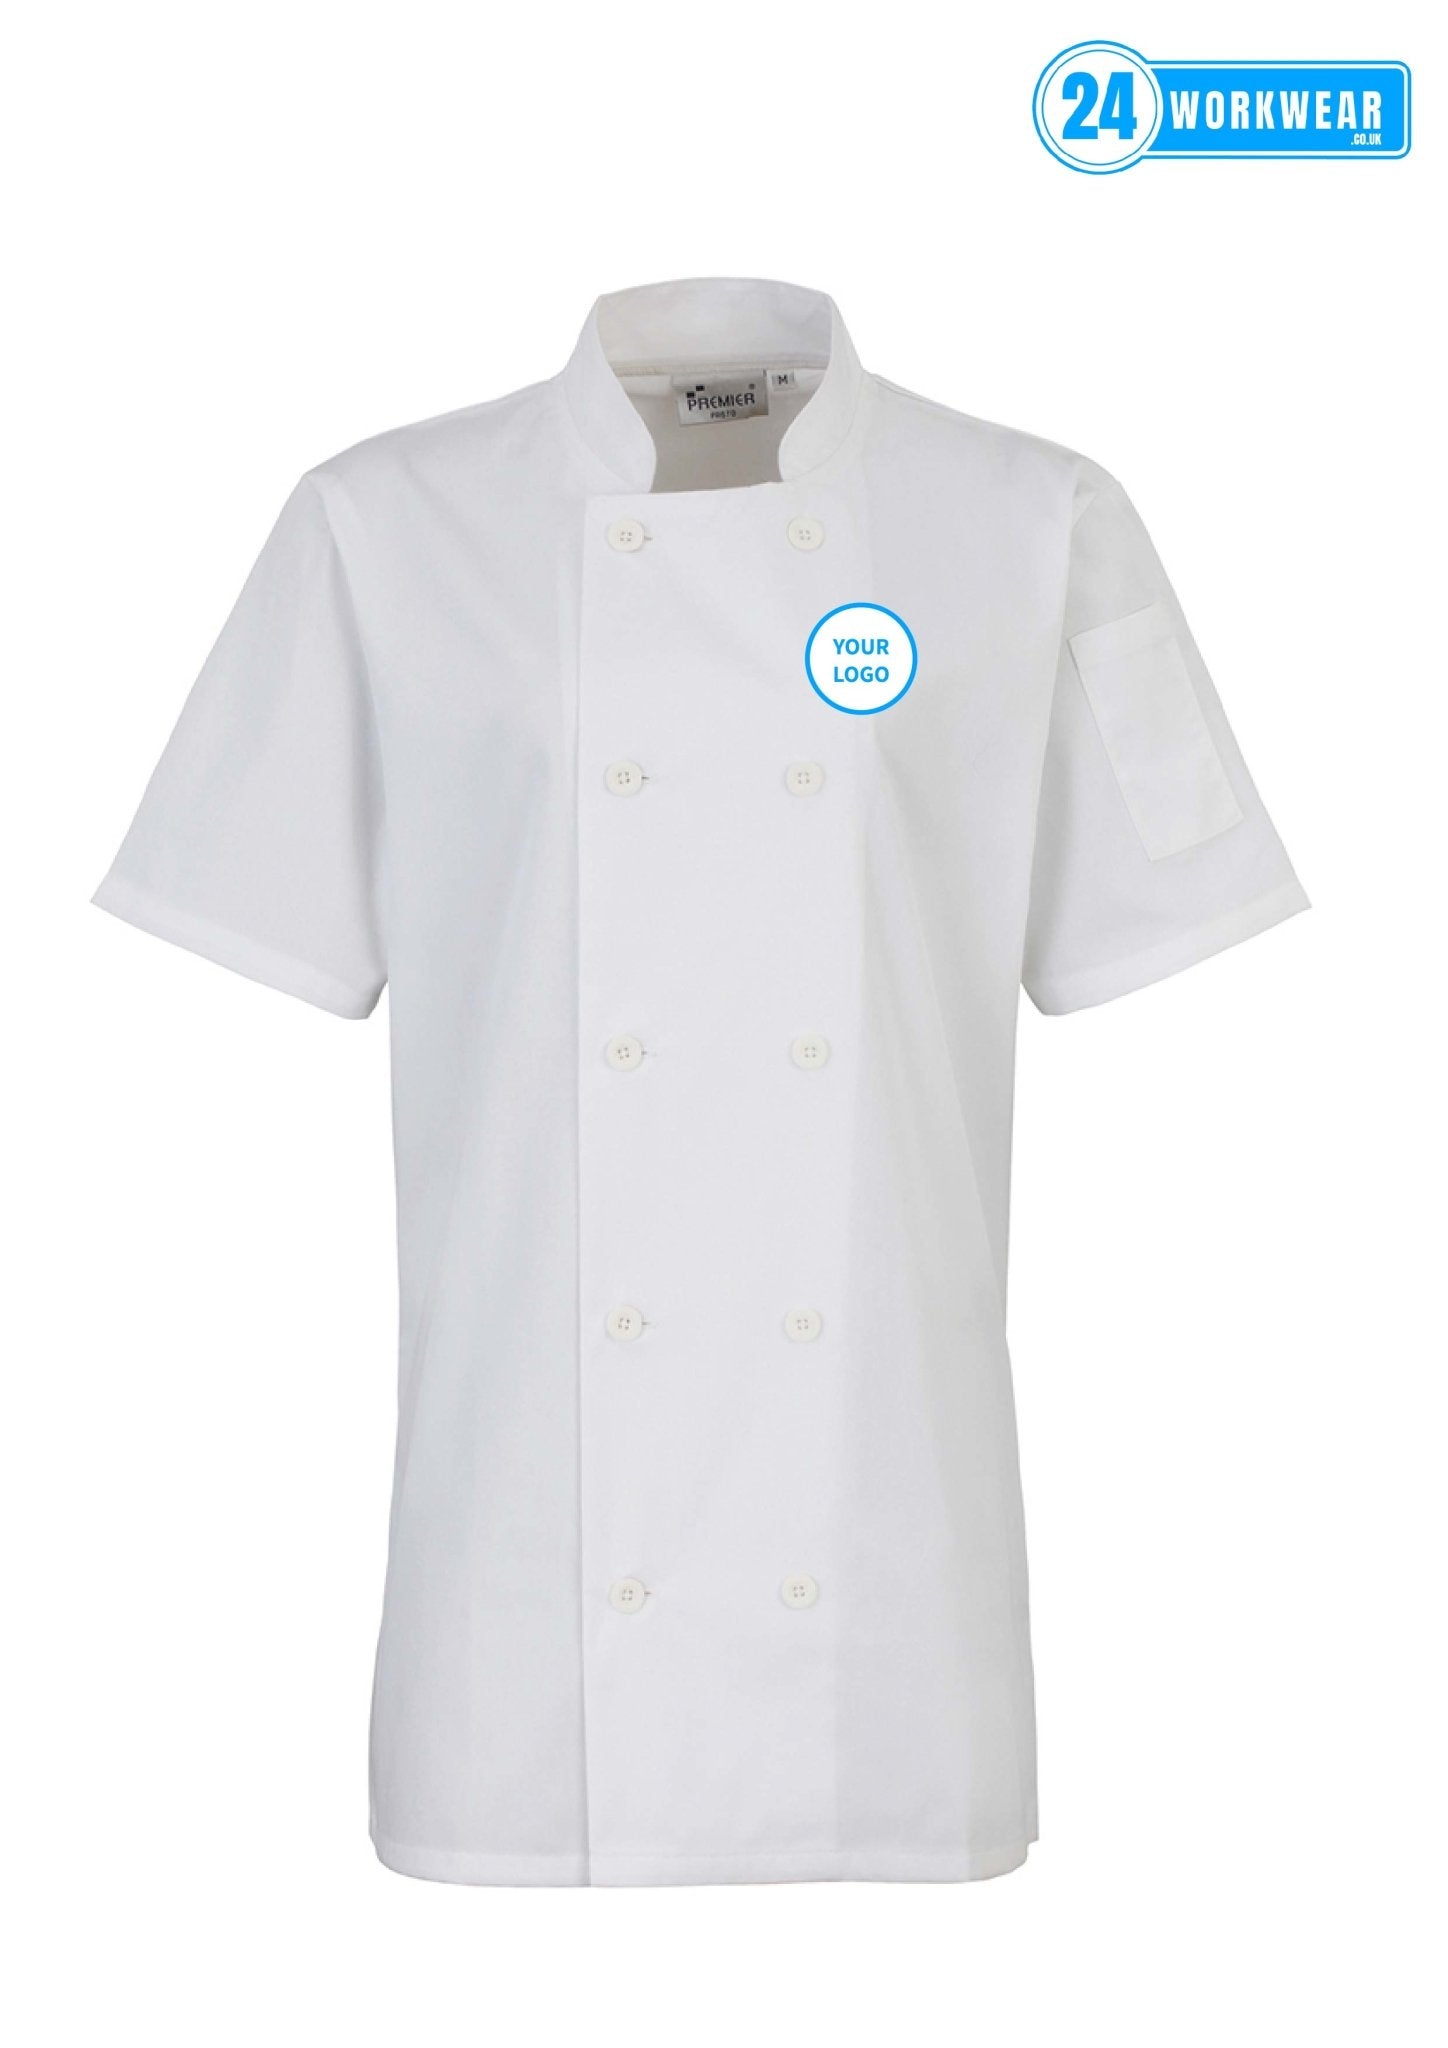 Premier Ladies Short Sleeve Chef's Jacket - 24 Workwear - Tunic